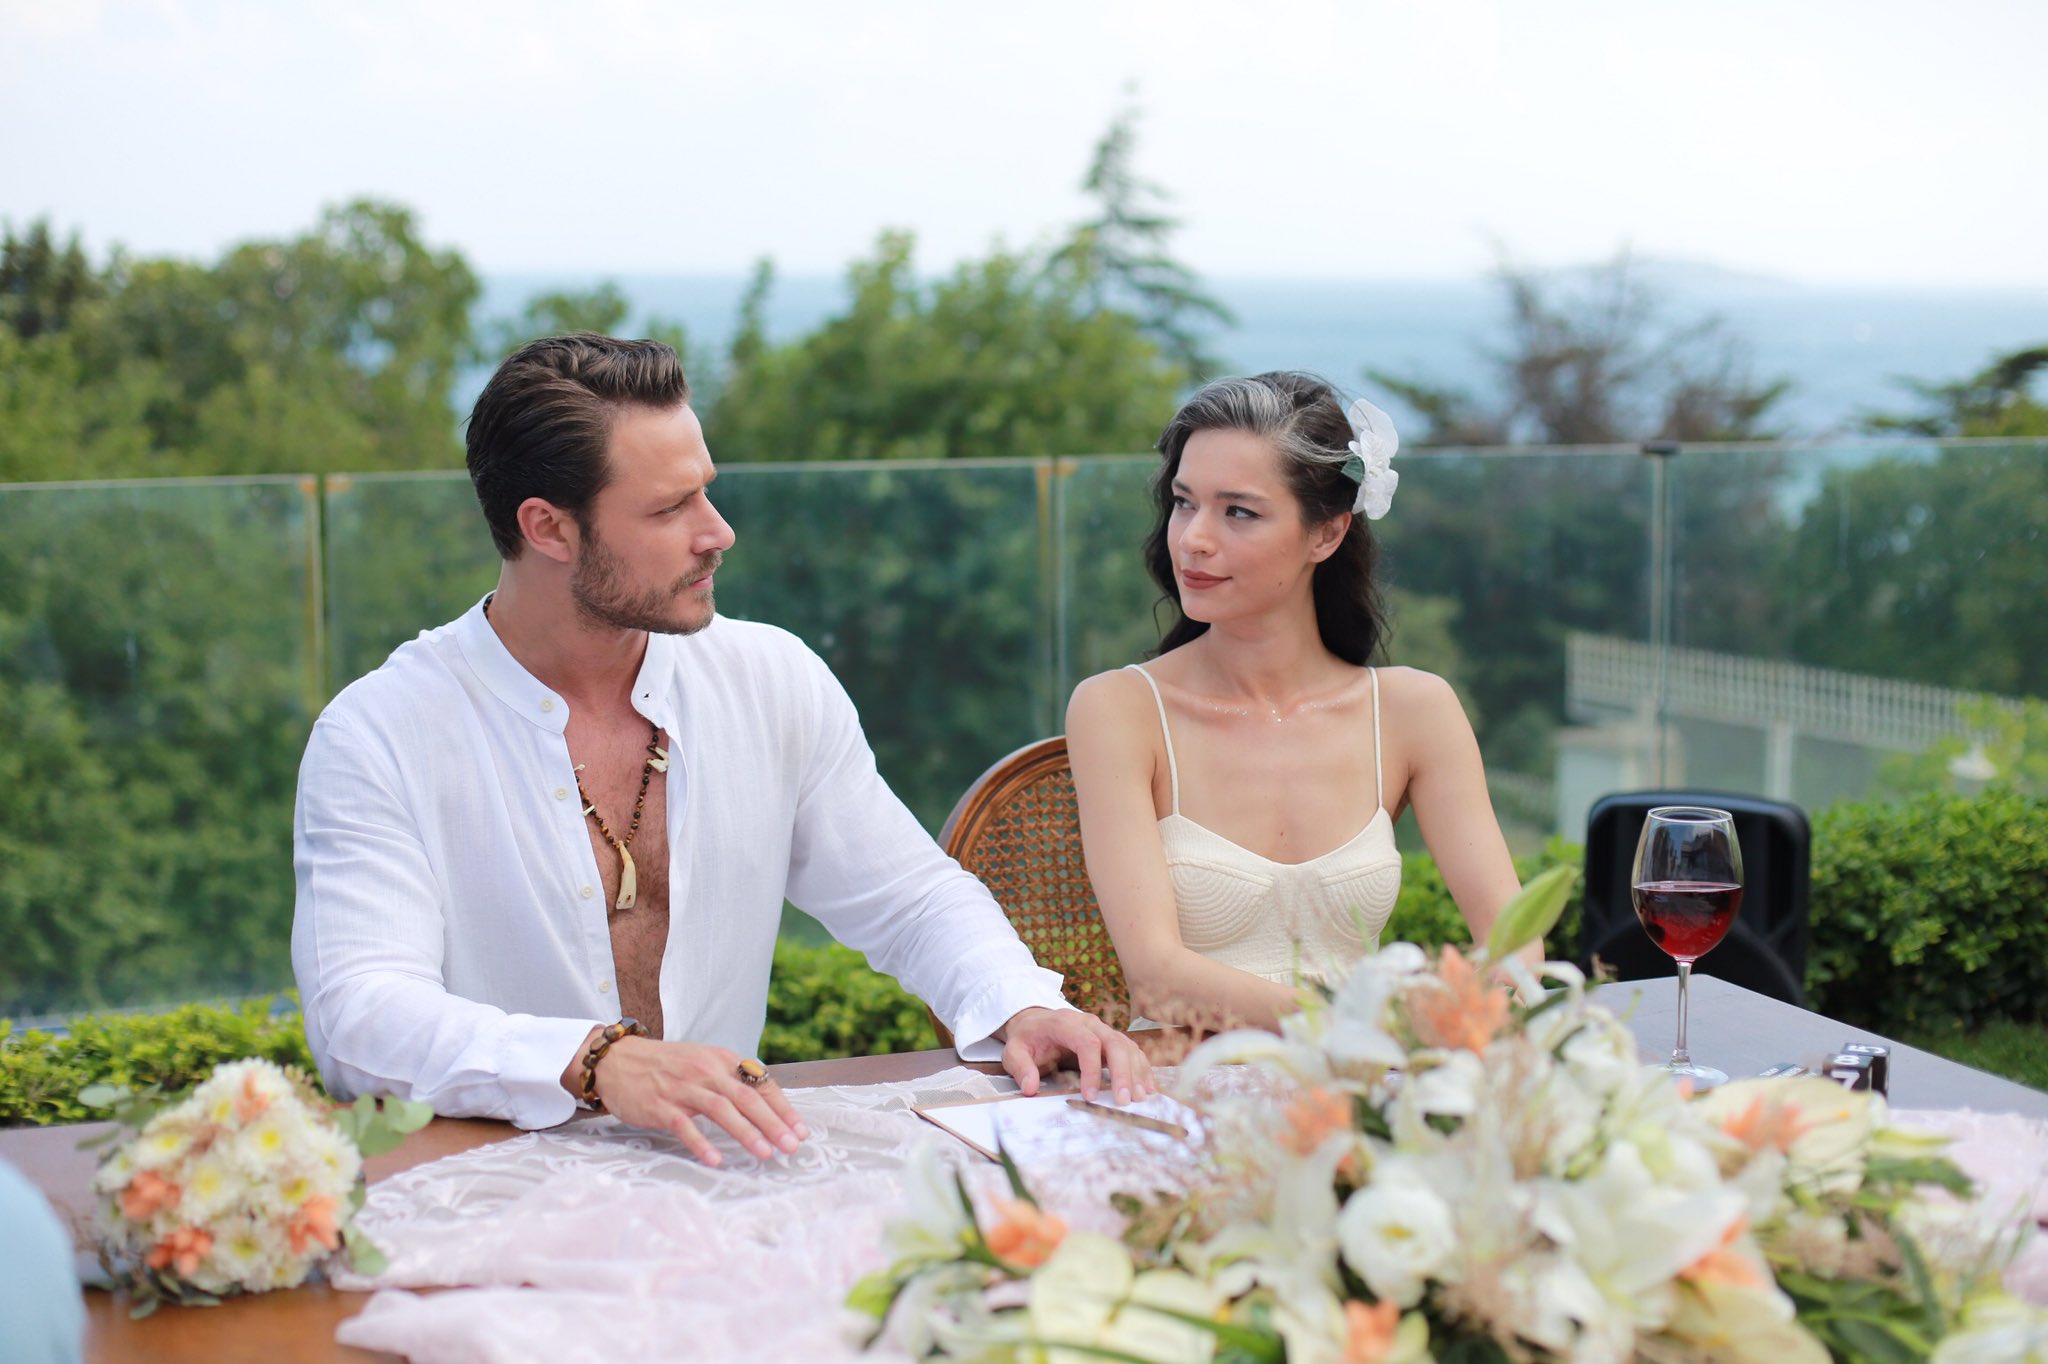 Senden Daha Güzel: la trama della decima puntata della serie romantica con Cemre Baysel e Burak Çelik